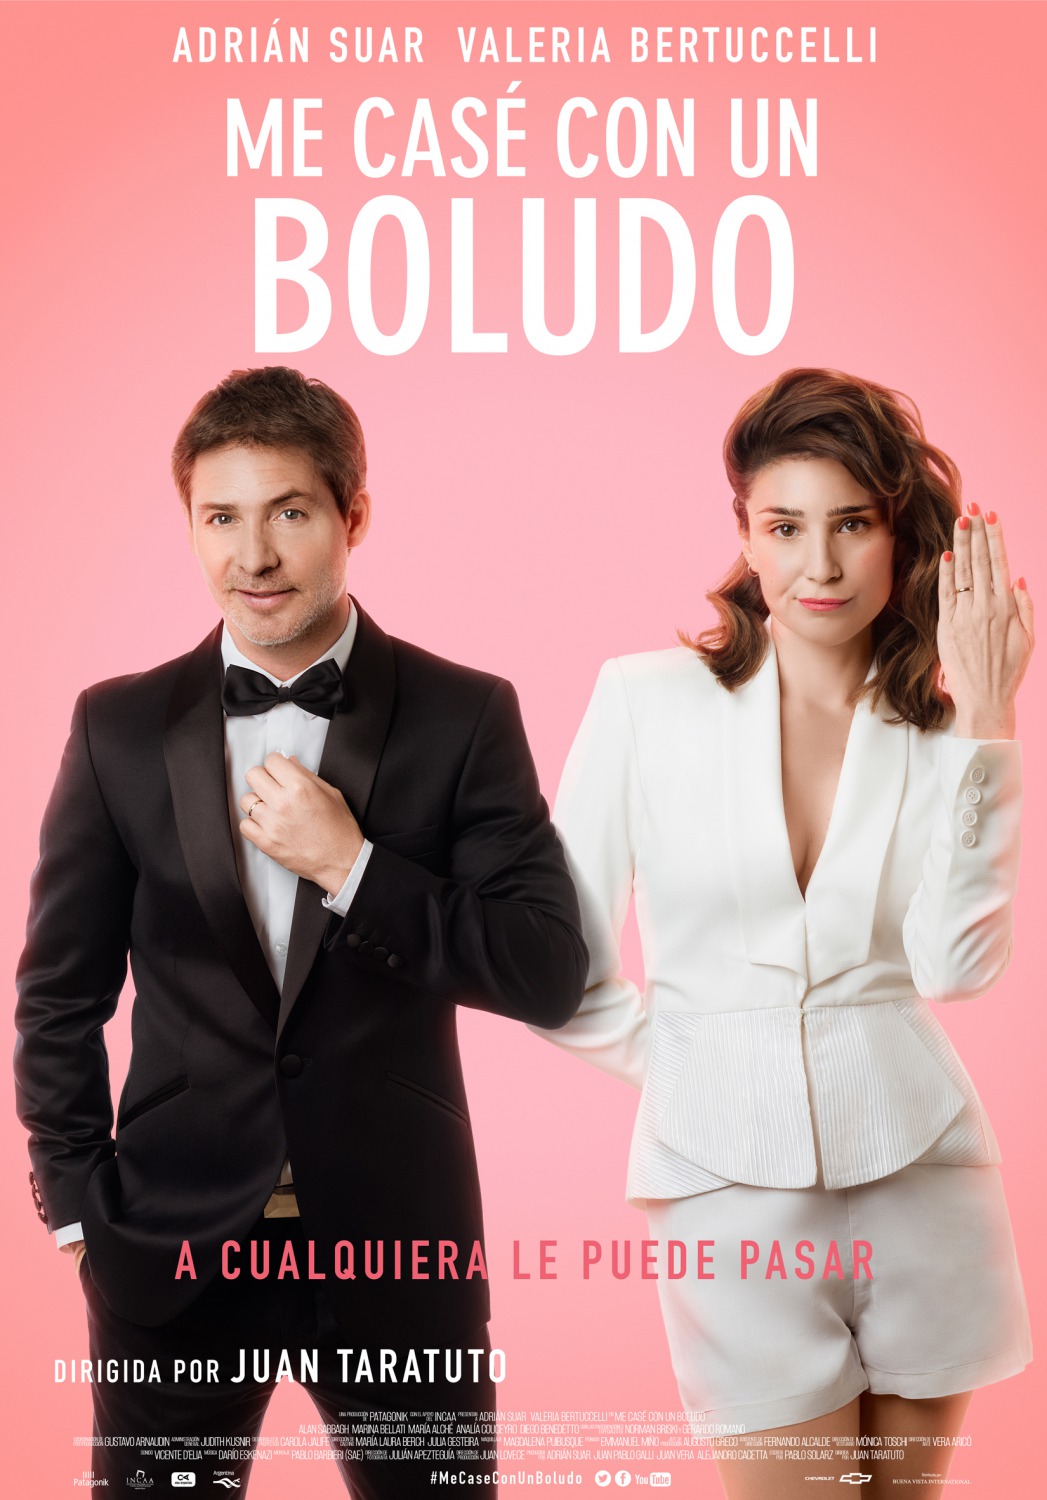 Extra Large Movie Poster Image for Me casé con un boludo (#2 of 2)